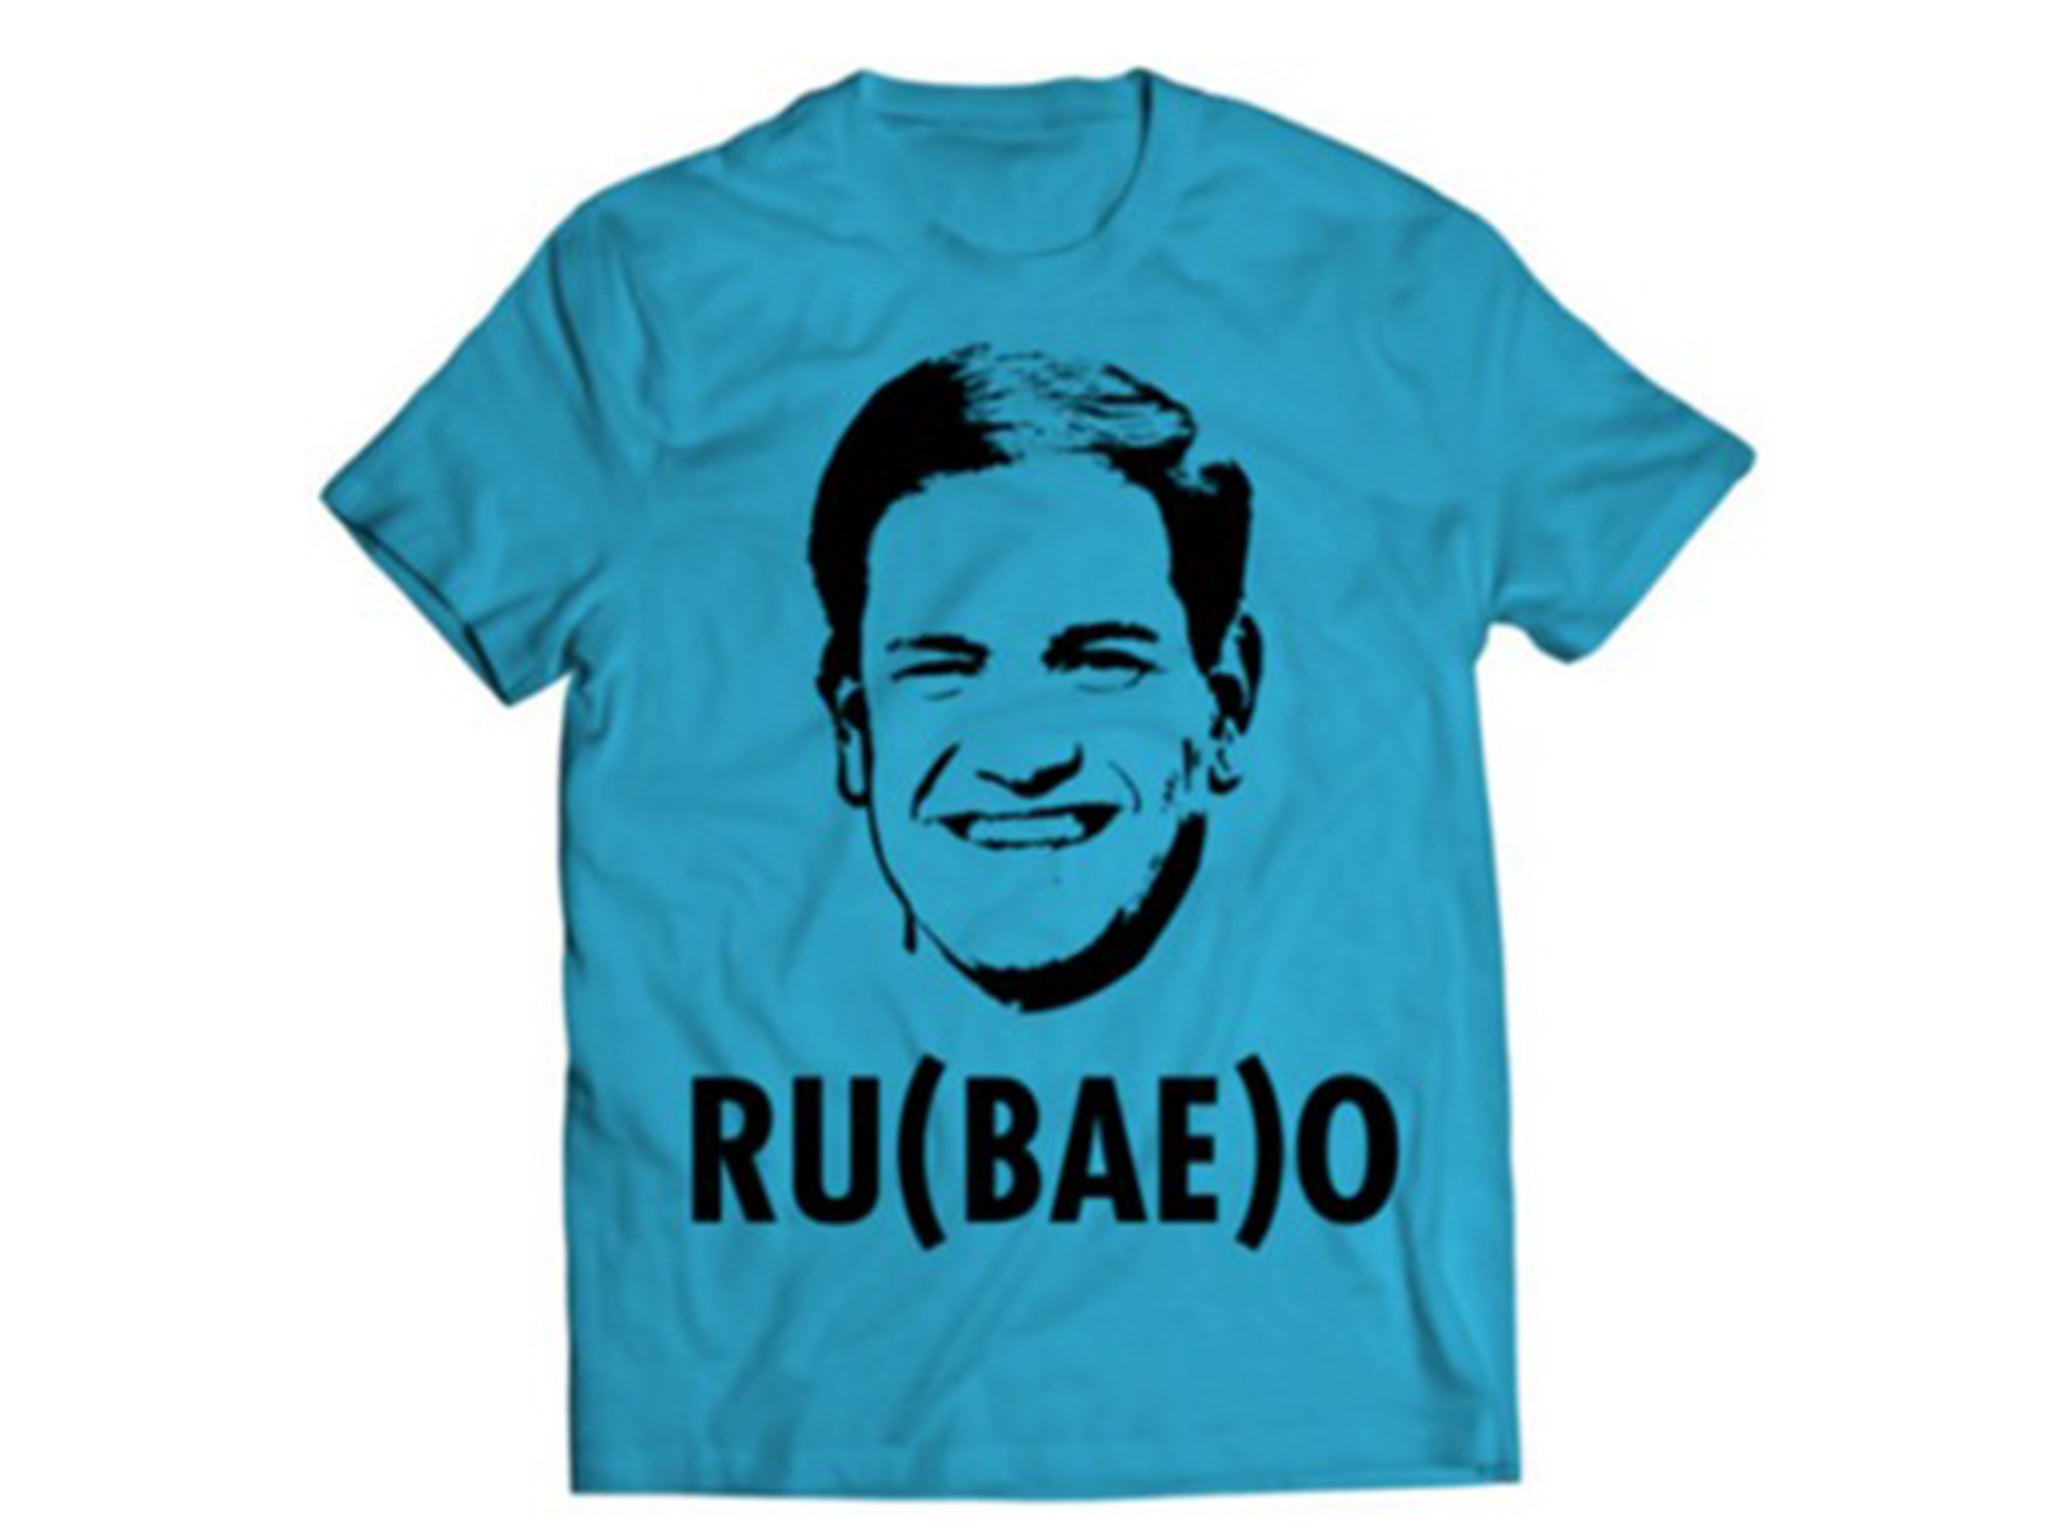 A Ru(bae)o T-shirt made for the presidential contender Marco Rubio